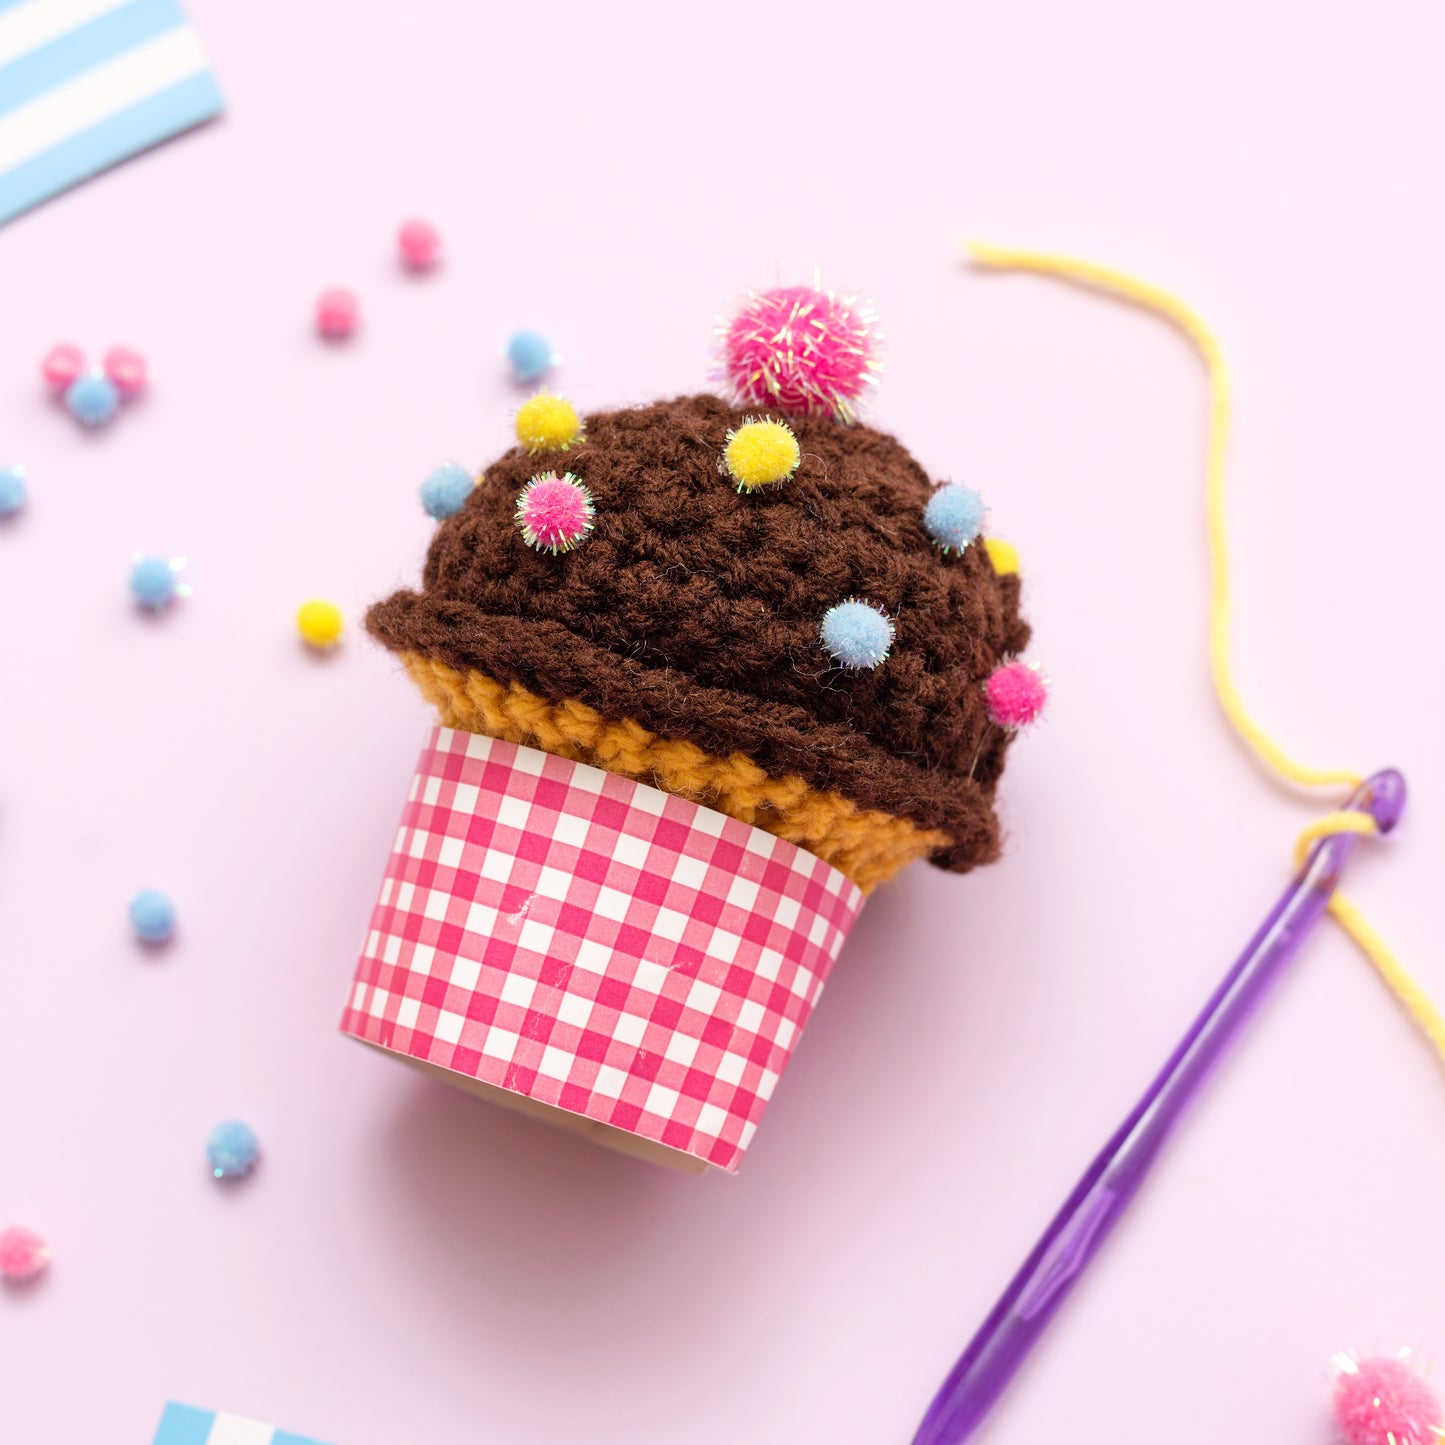 Sew Cute! Crochet Cupcake Kit